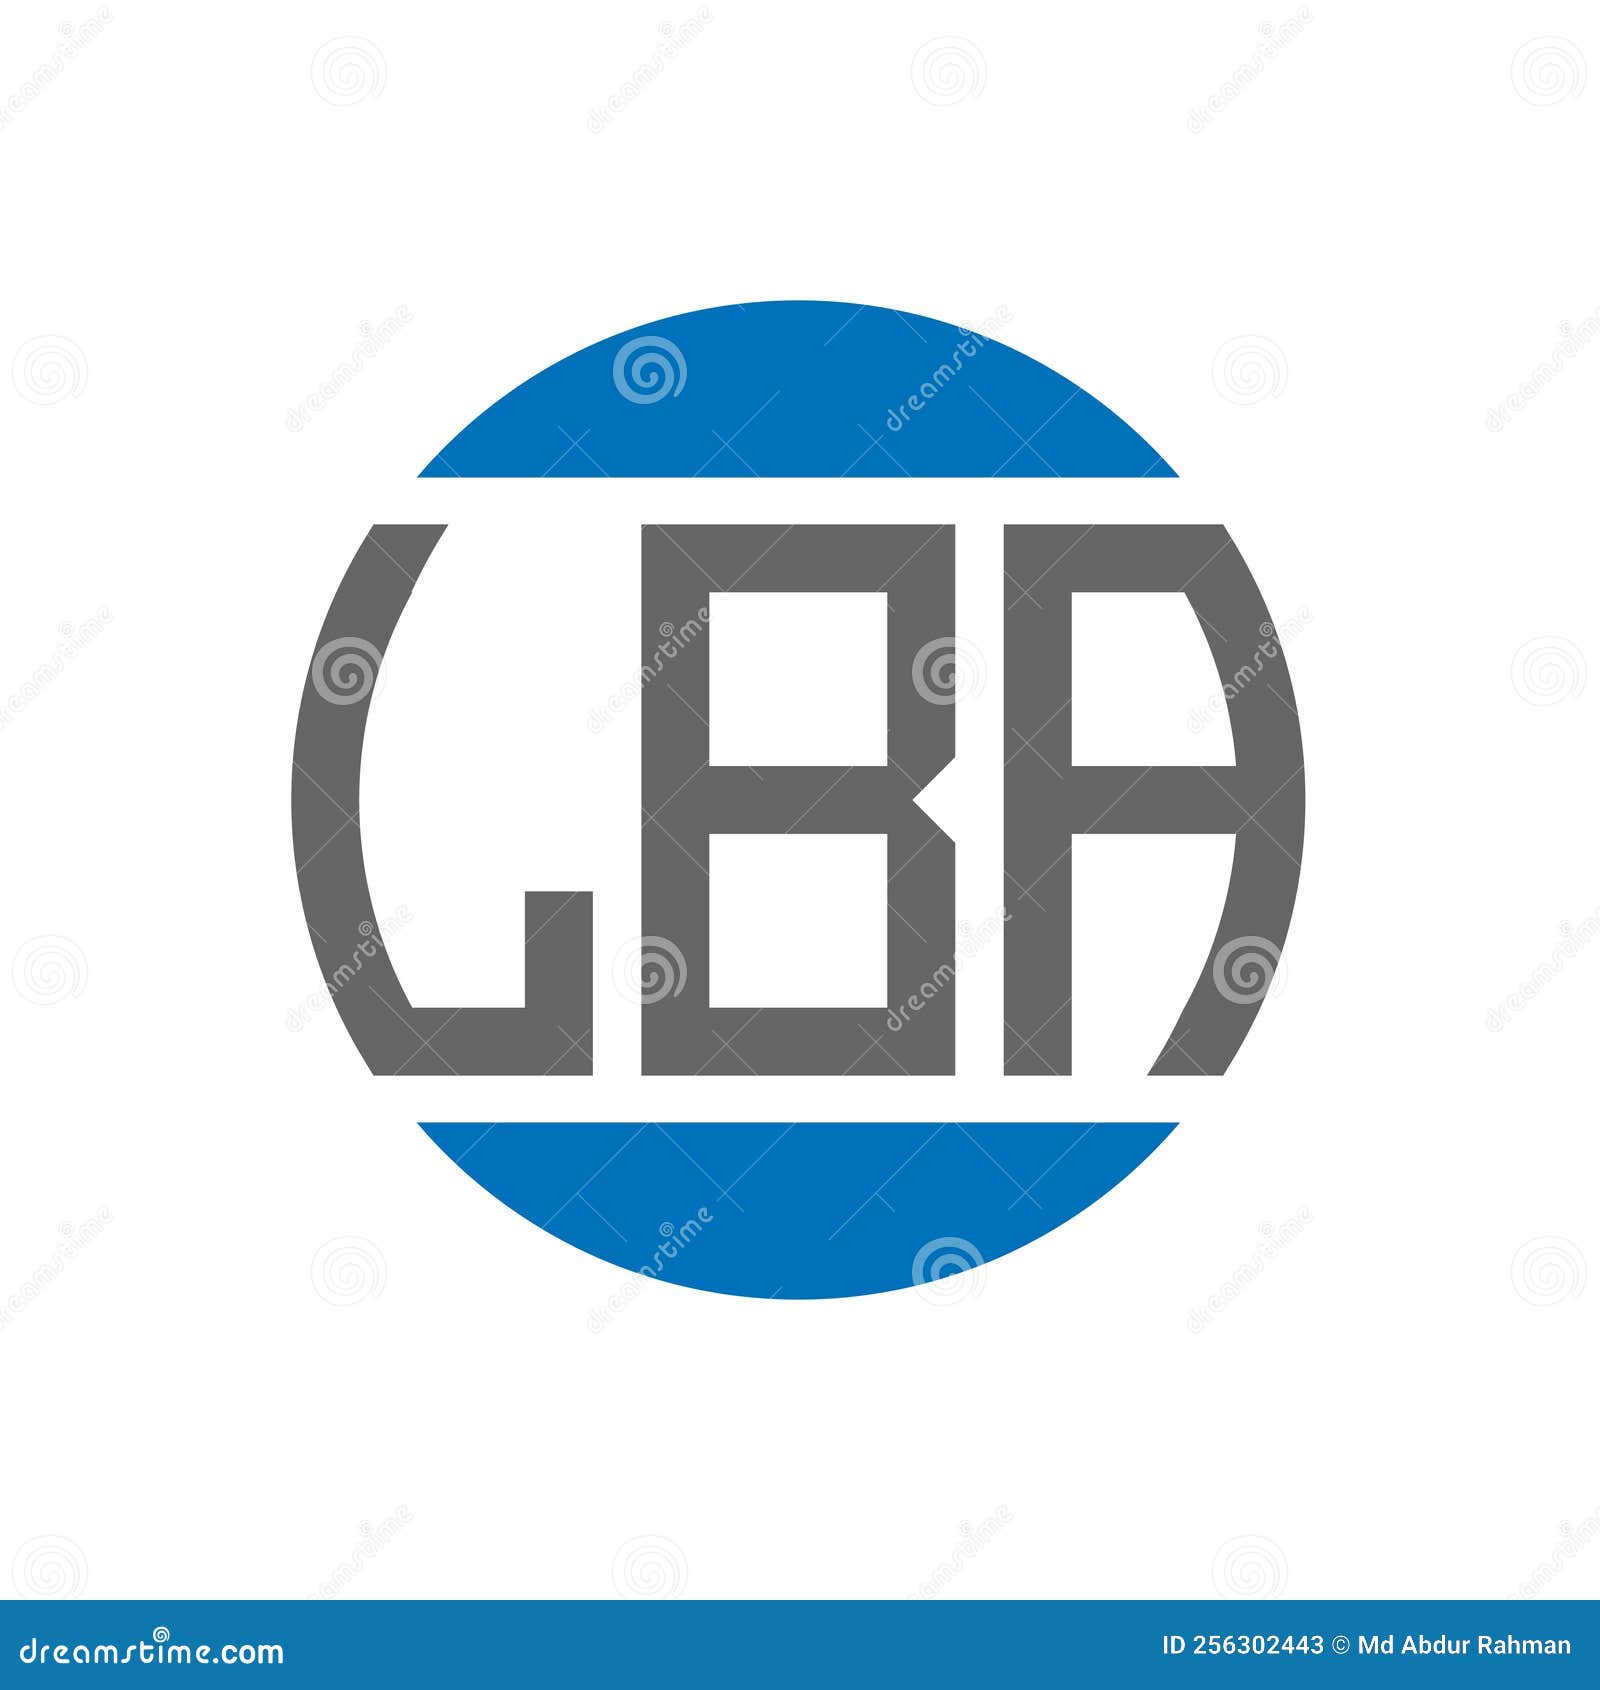 lba letter logo  on white background. lba creative initials circle logo concept. lba letter 